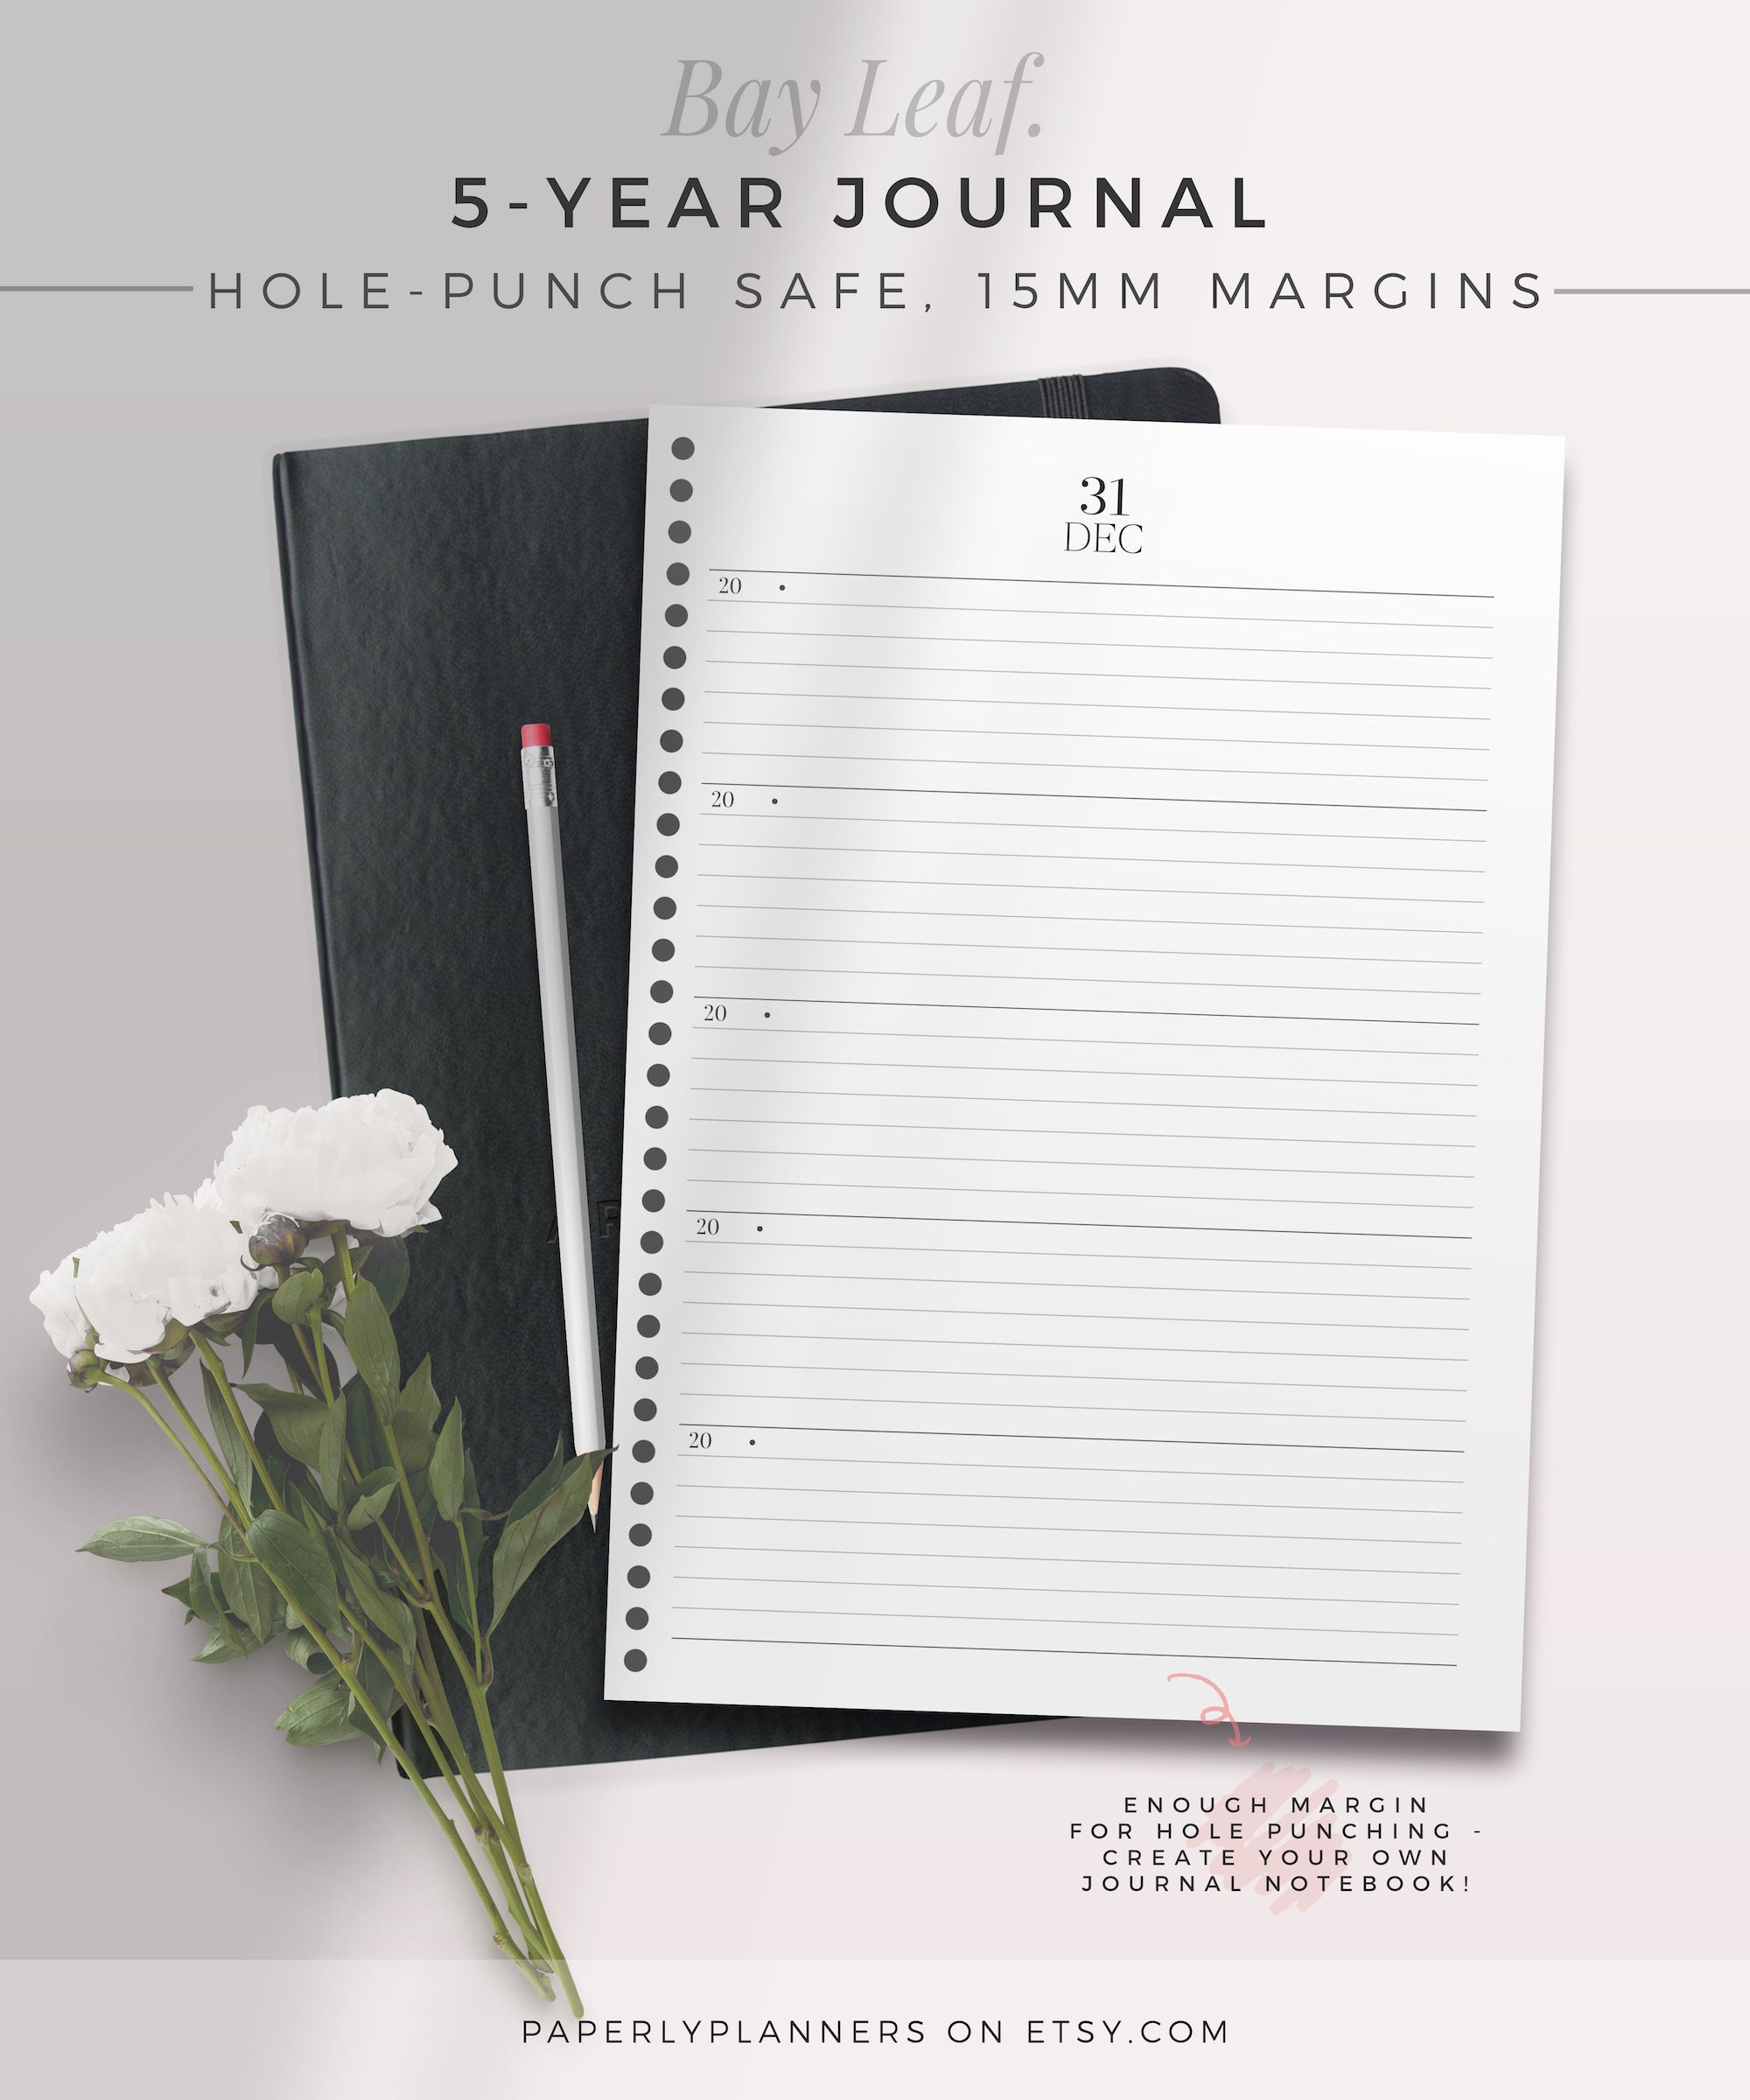 bay-leaf-5-year-journal-a4-letter-printable-planner-etsy-uk